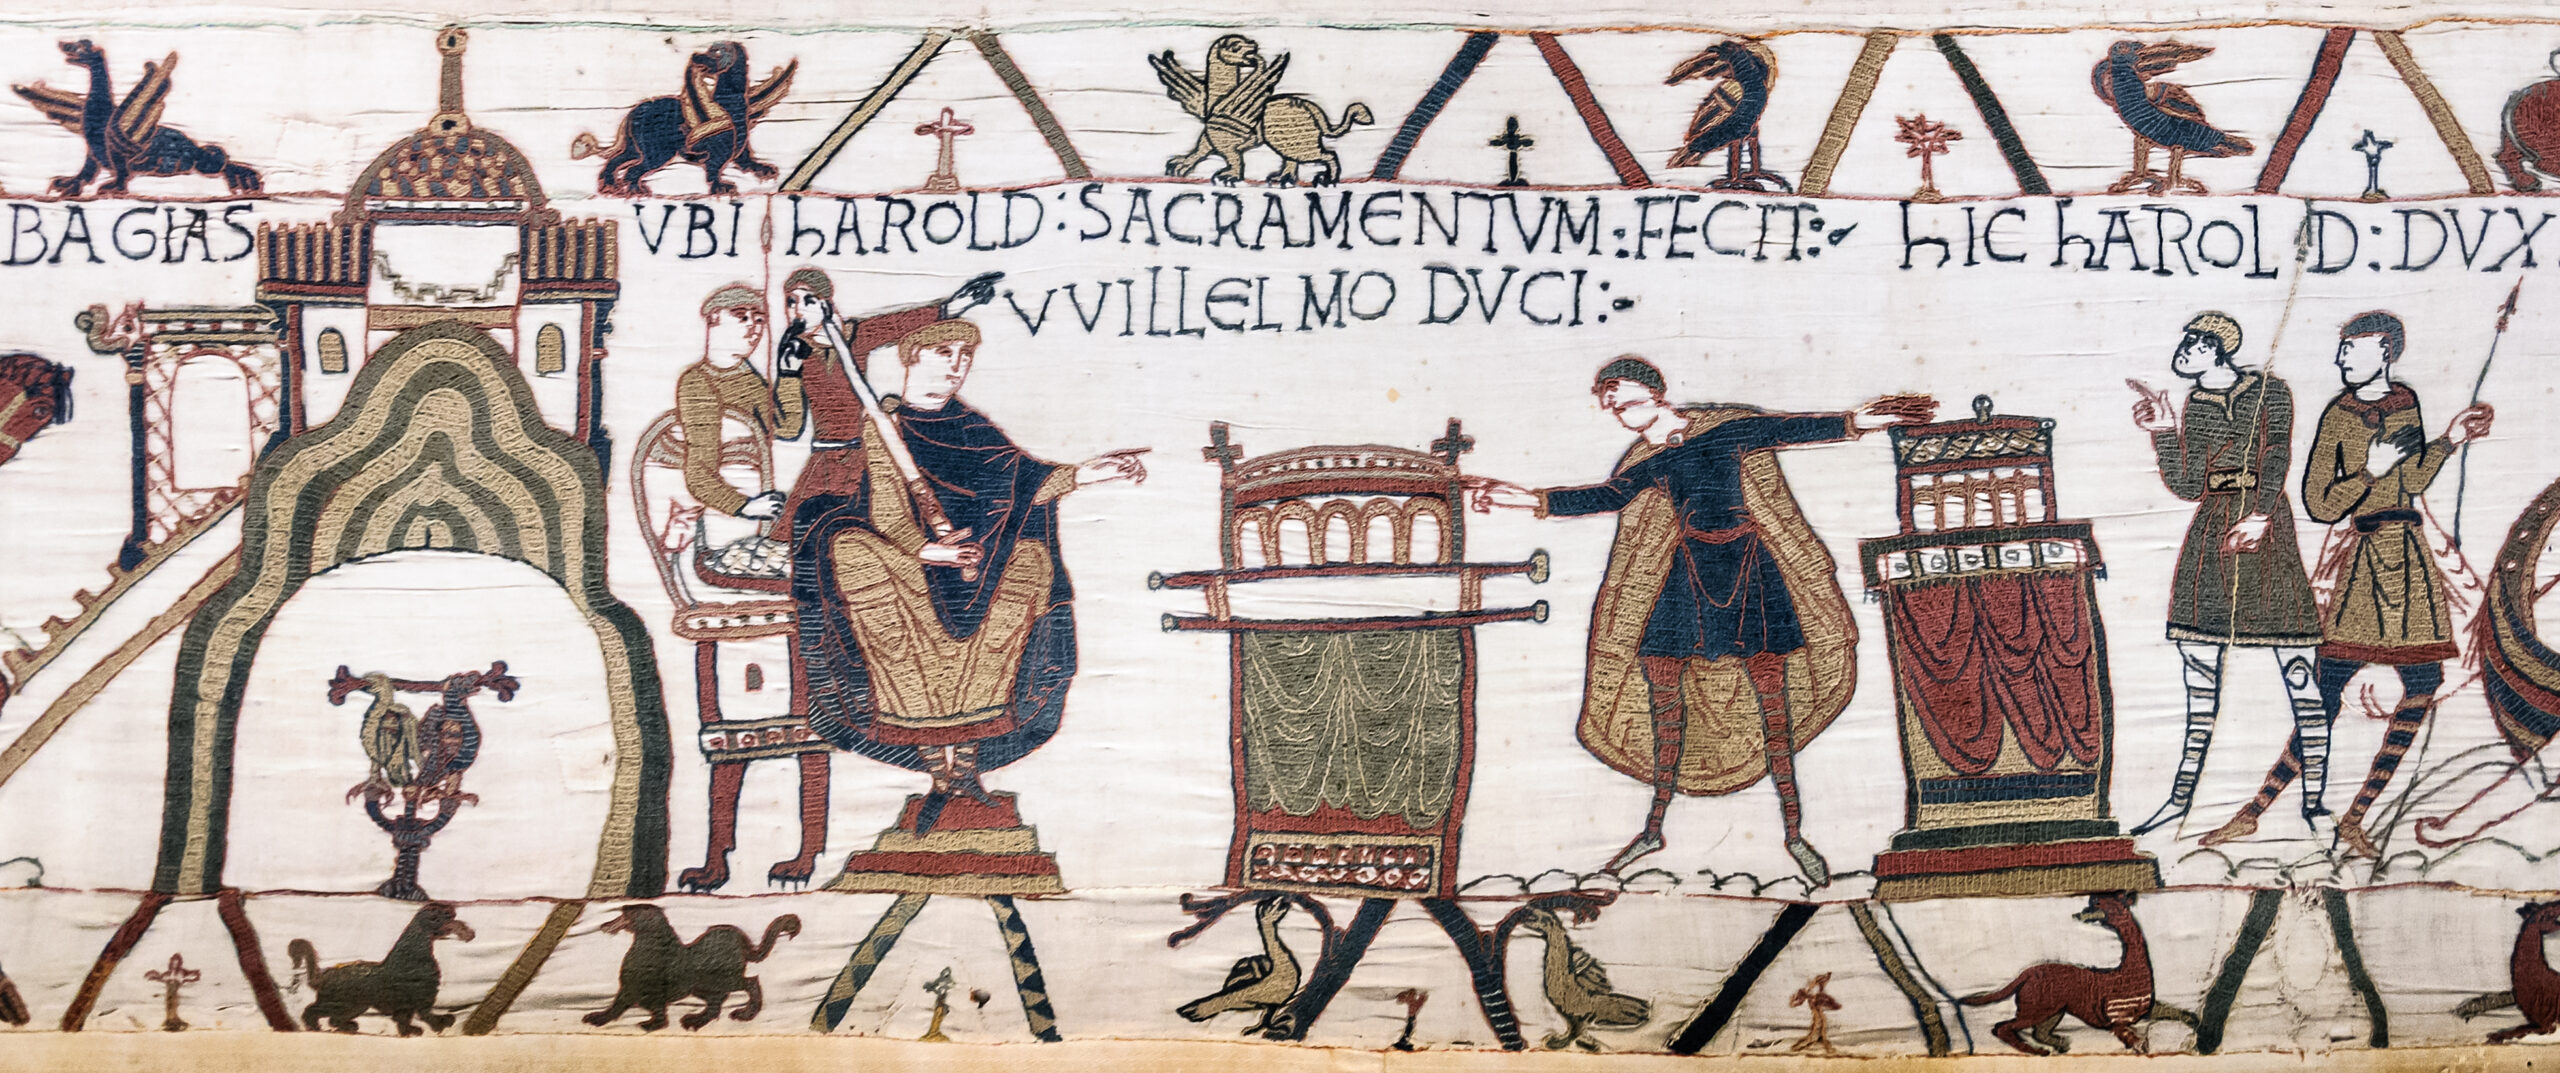 Bayeux tapestry, scene depicting Harold's oath.